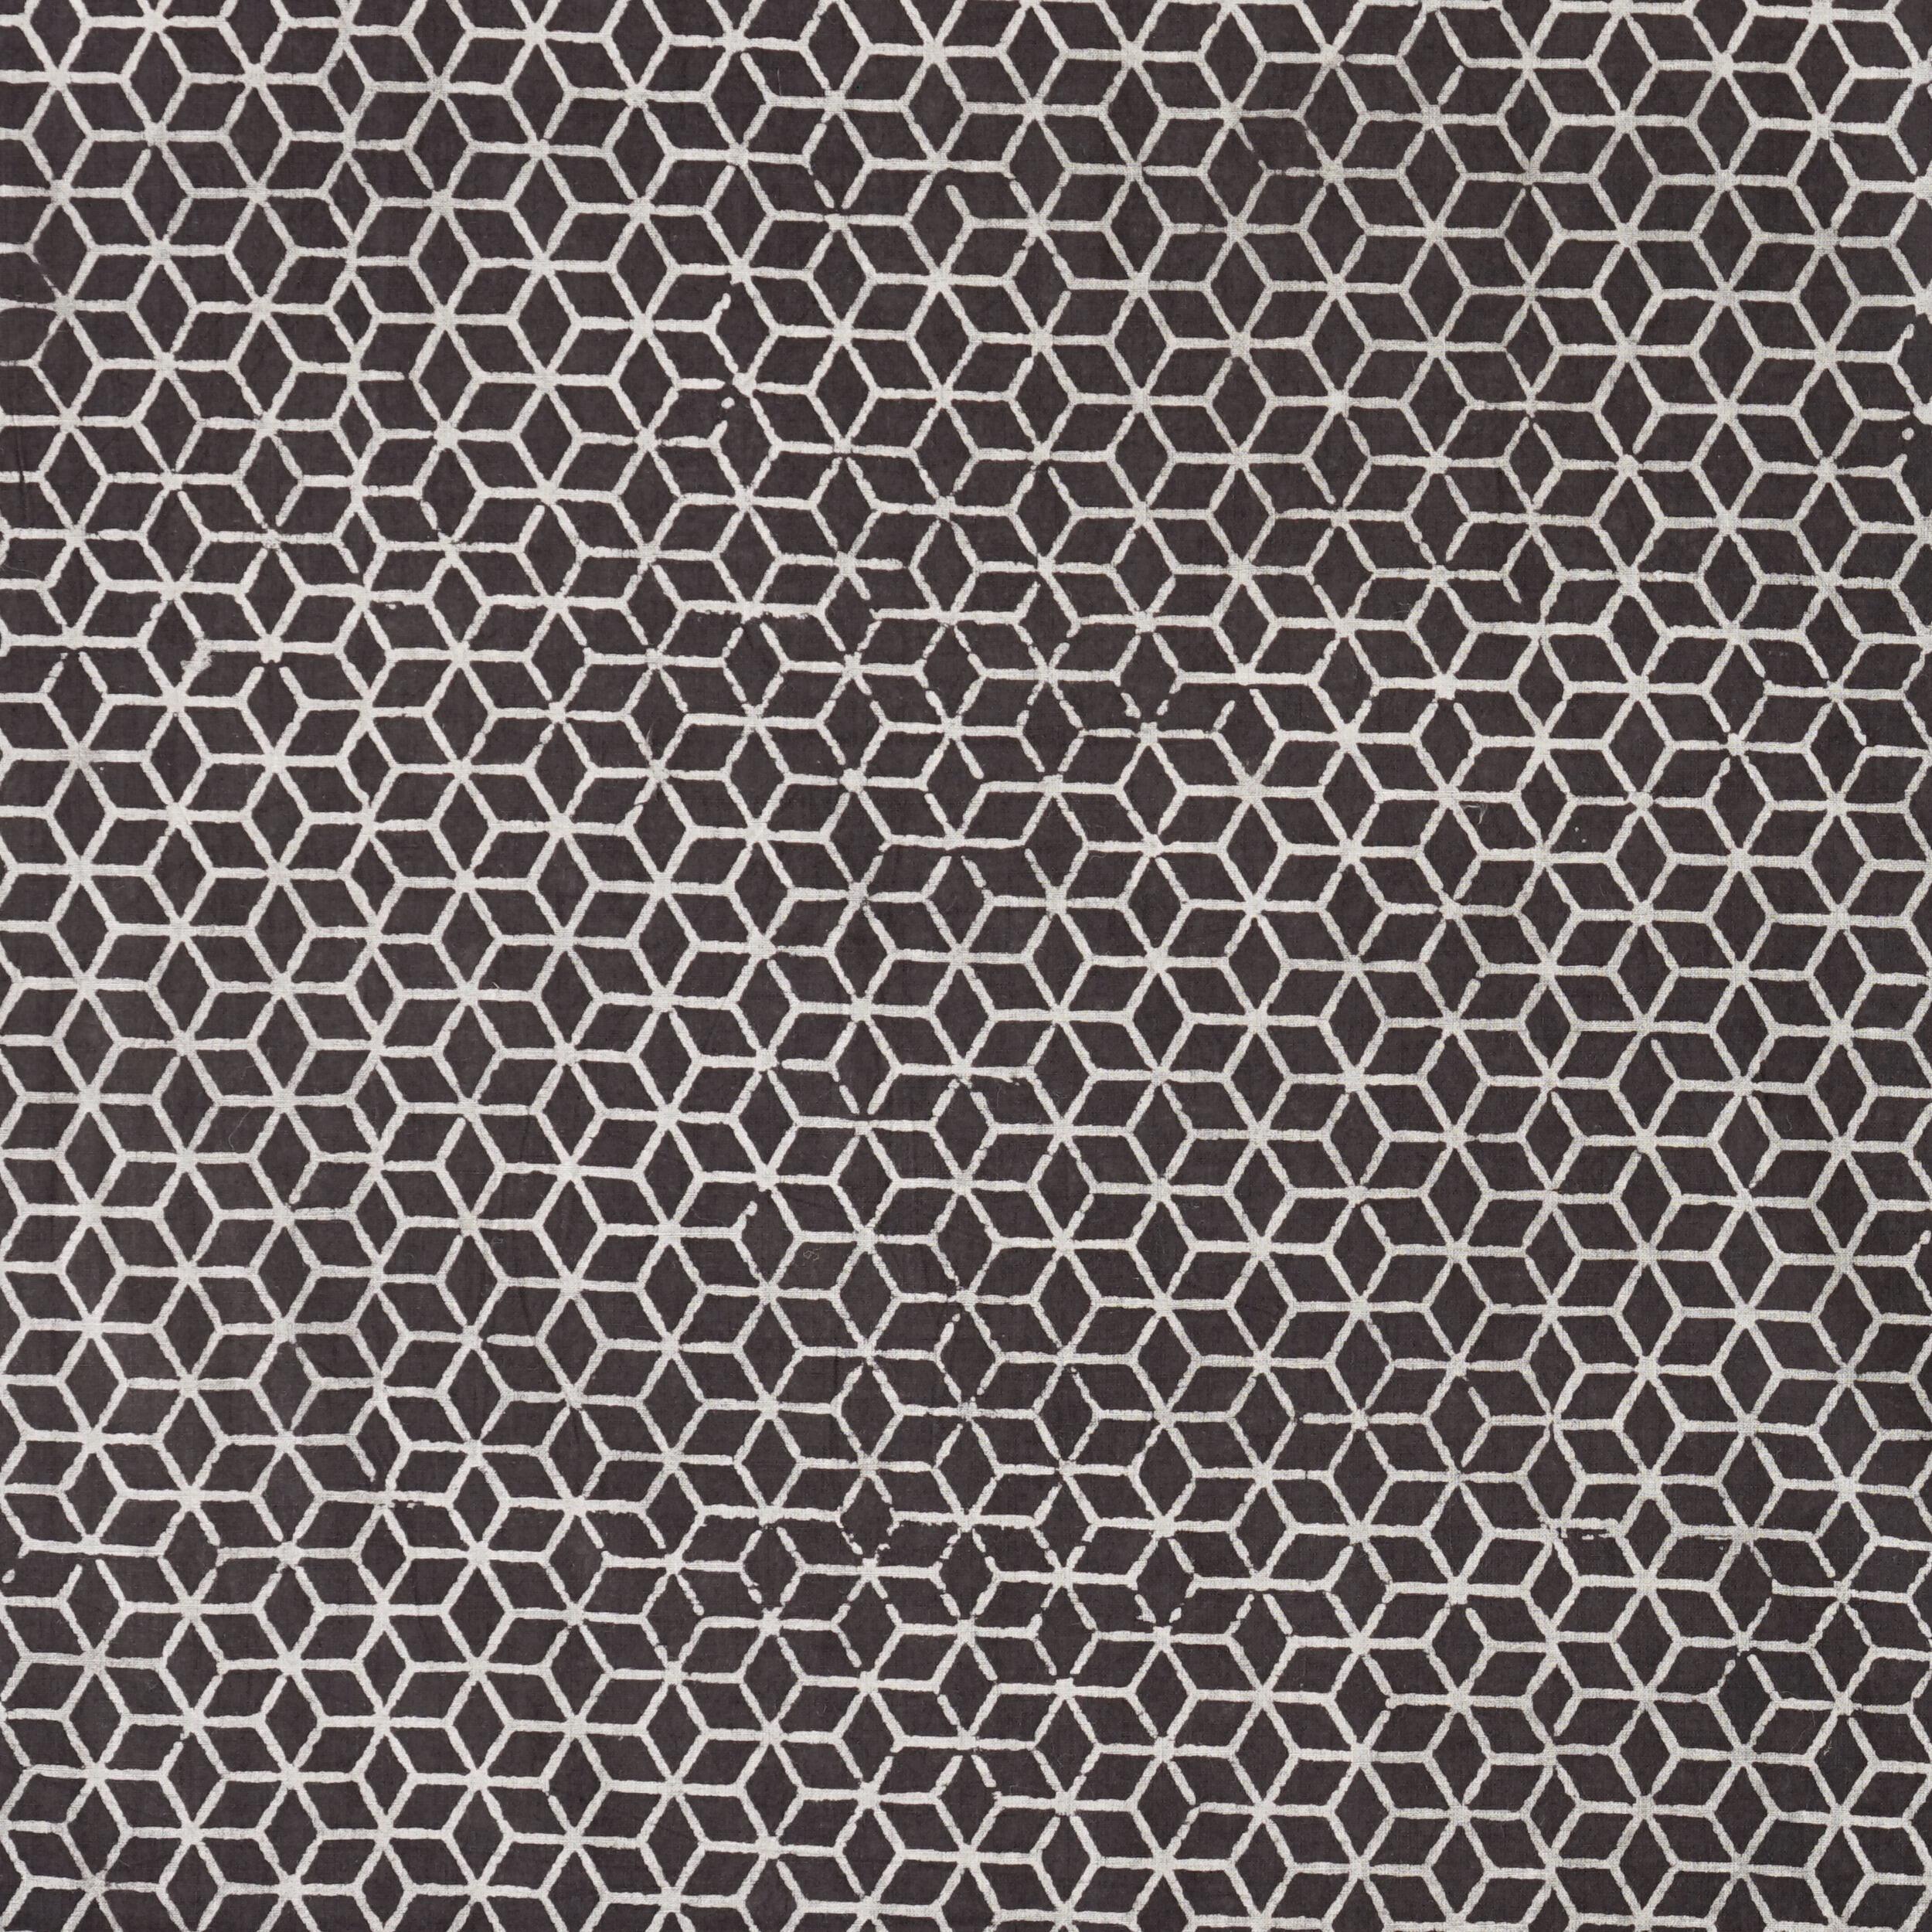 Block Printed Fabric, 100% Cotton, Ajrak Design: Iron Black Base, White Tumbling Block. Flat